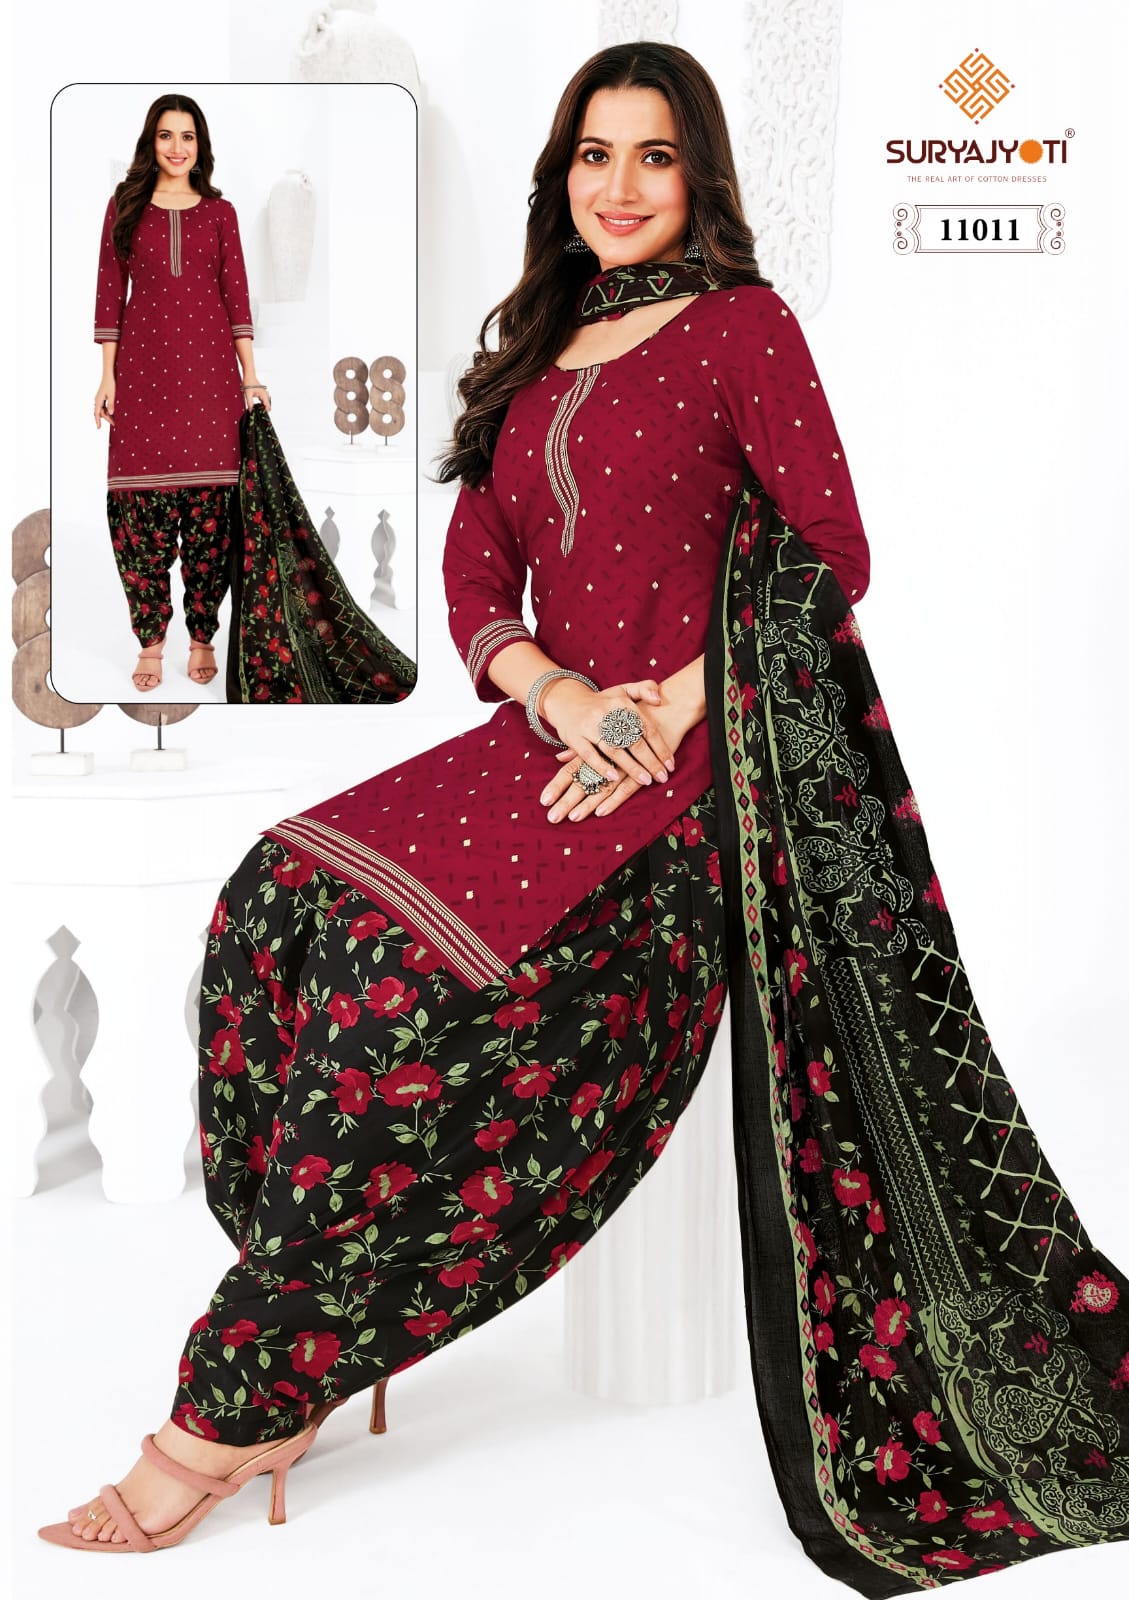 Trendy Patiyala Vol 11 Suryajyoti Cotton Dress Material